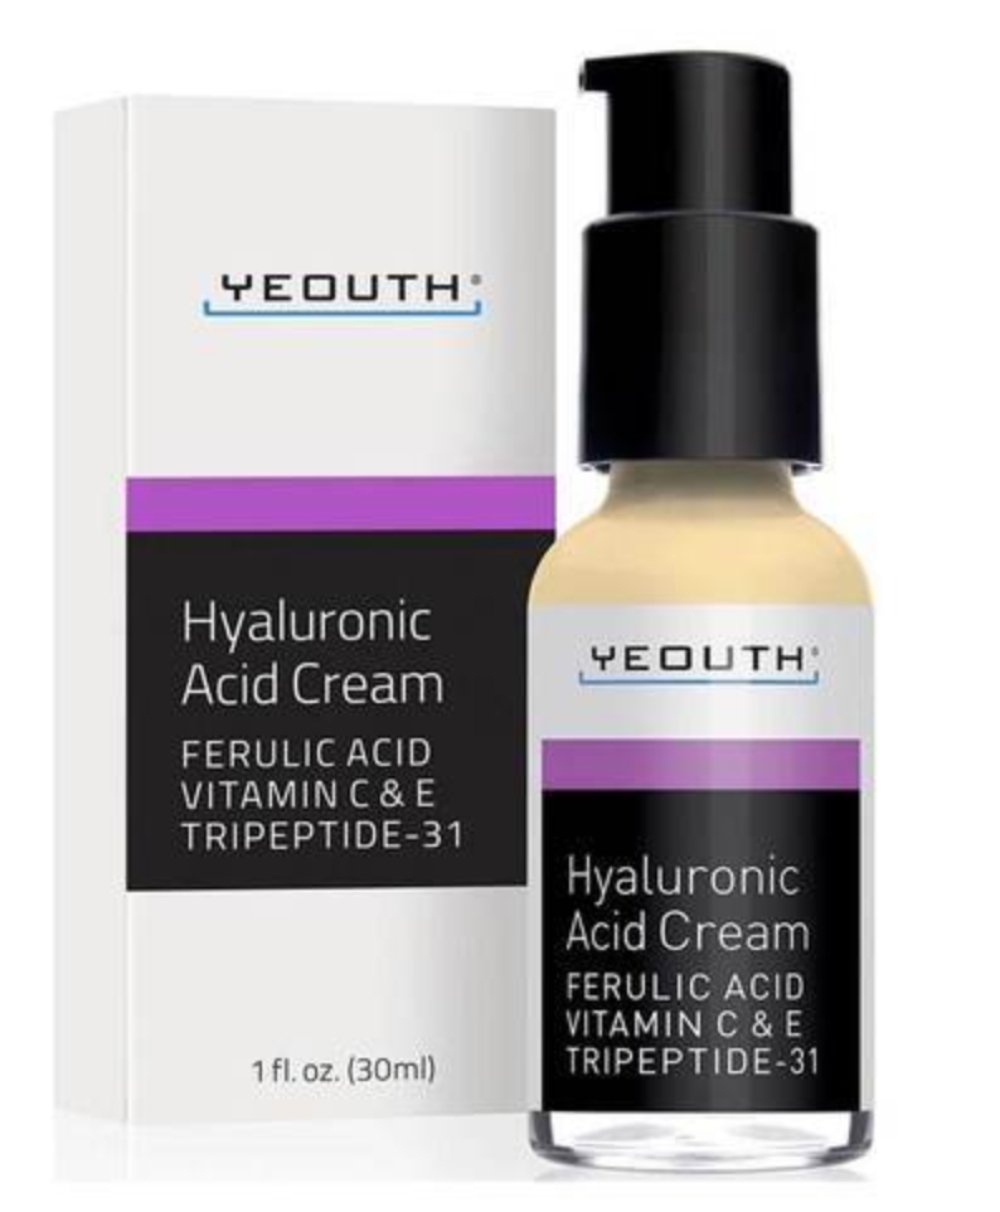 YEOUTH Hyaluronic Acid Cream 30ml (1 fl oz) - The Face Method